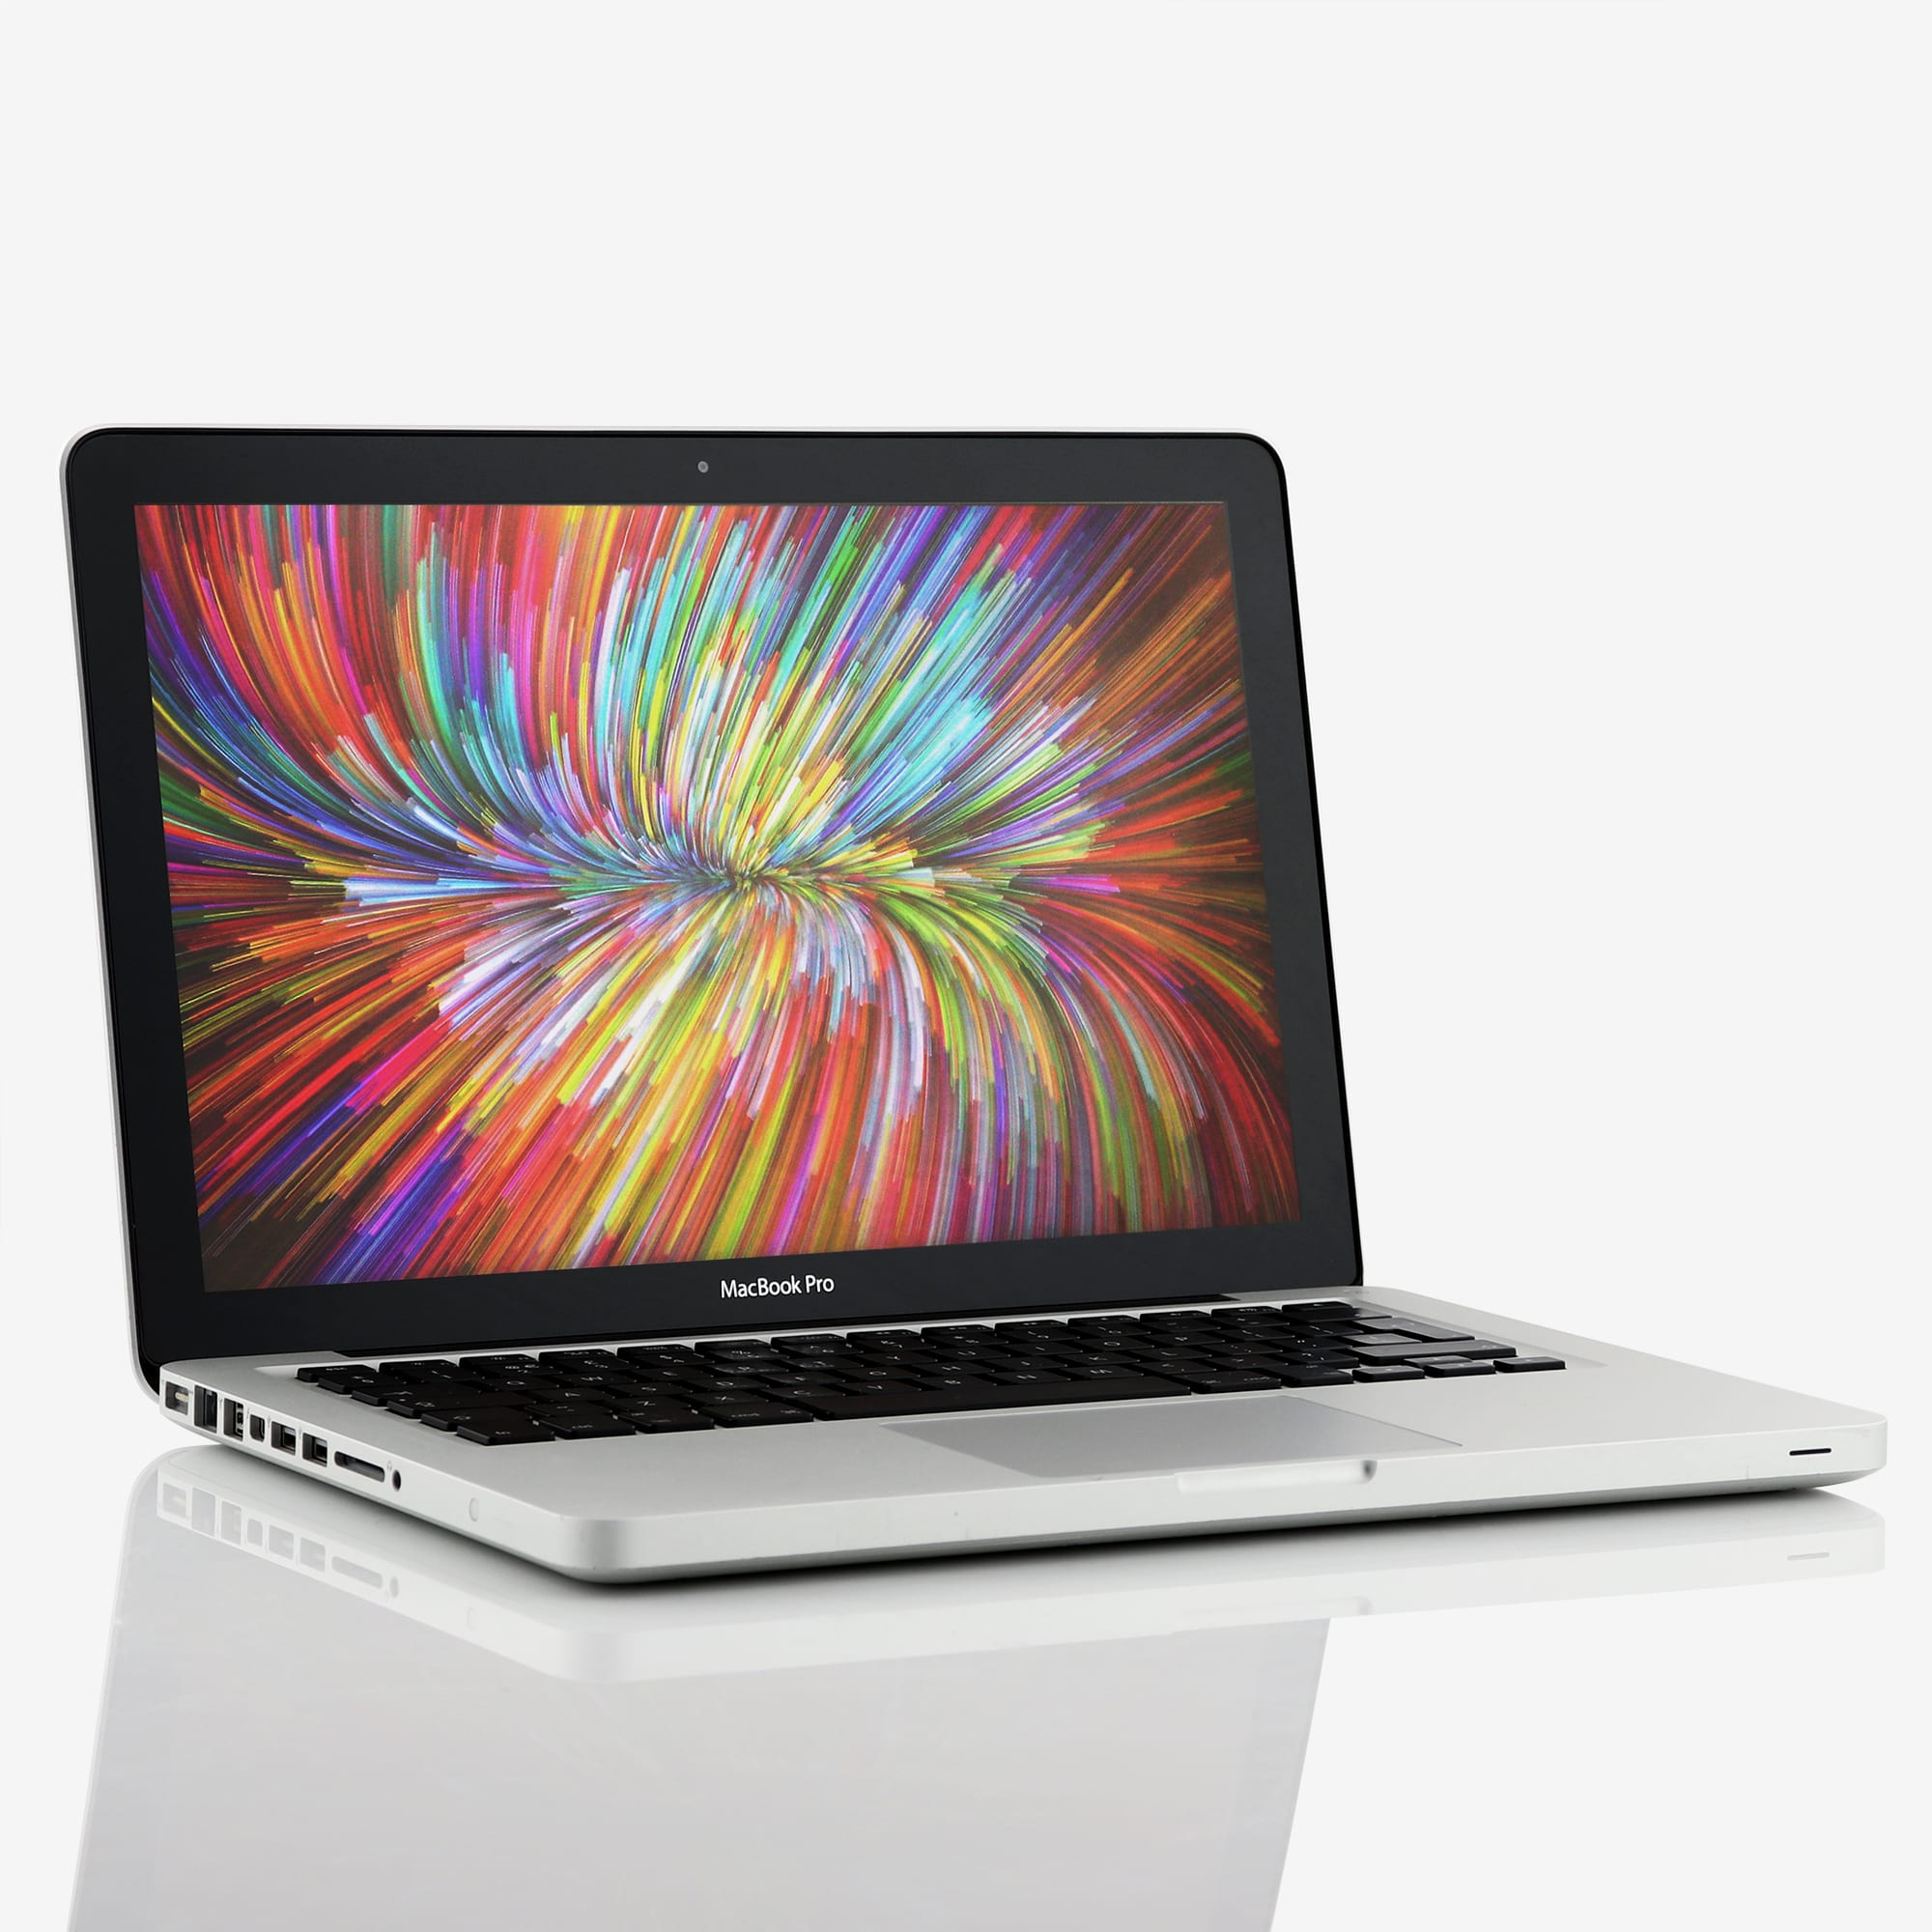 1 x MacBook Pro 13 Inch